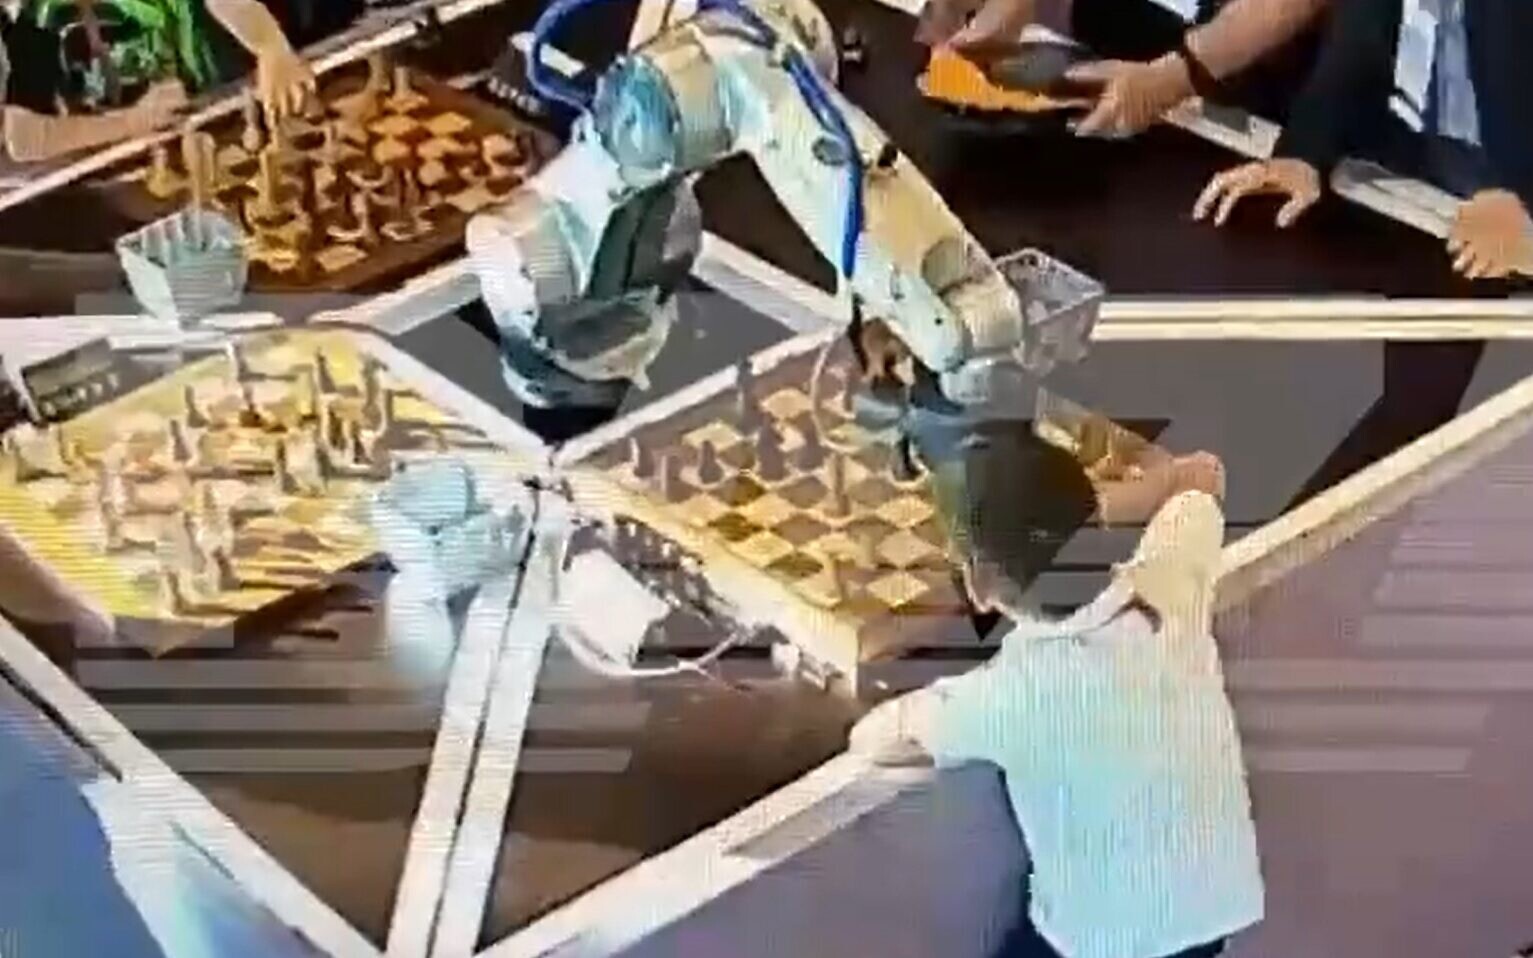 Robô jogador de xadrez trapaceia e xinga seus adversários humanos